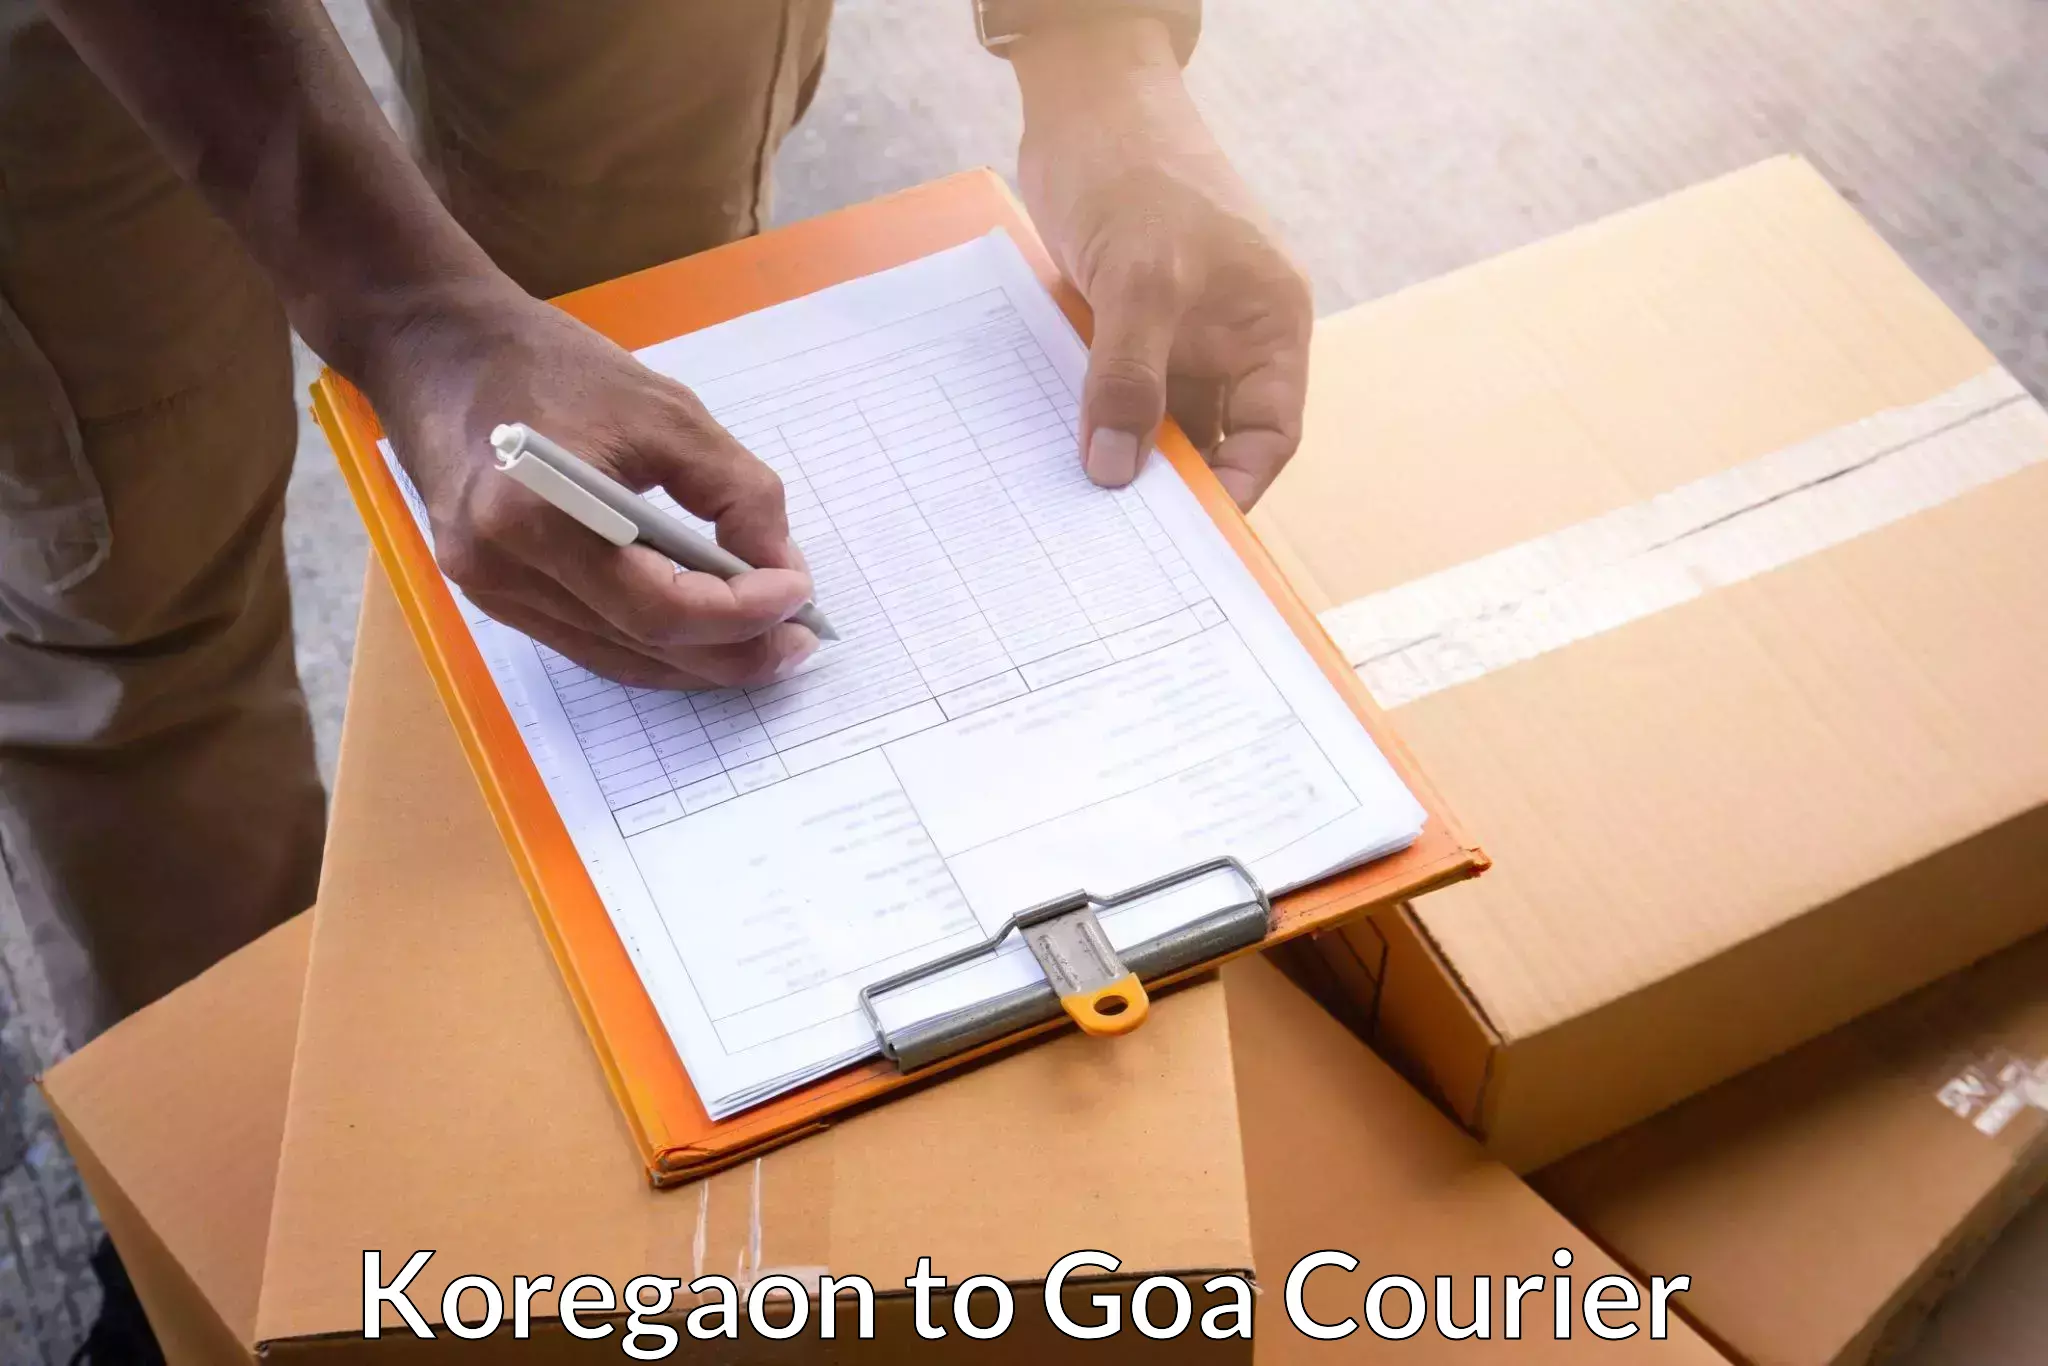 Remote area delivery Koregaon to Panaji